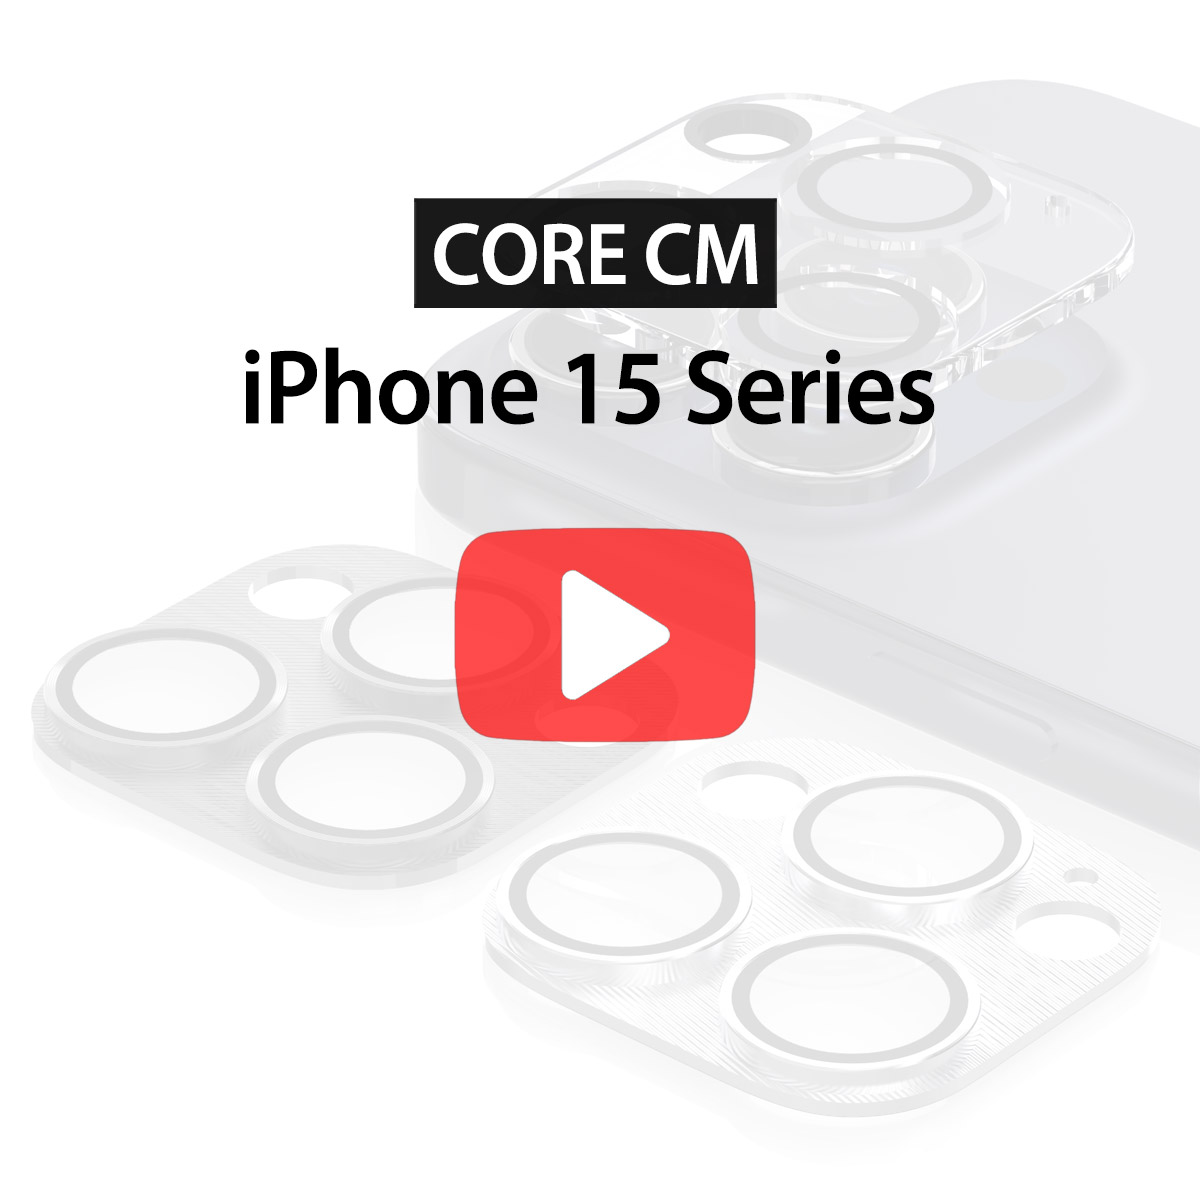 [iPhone 15 Series] CORE CM